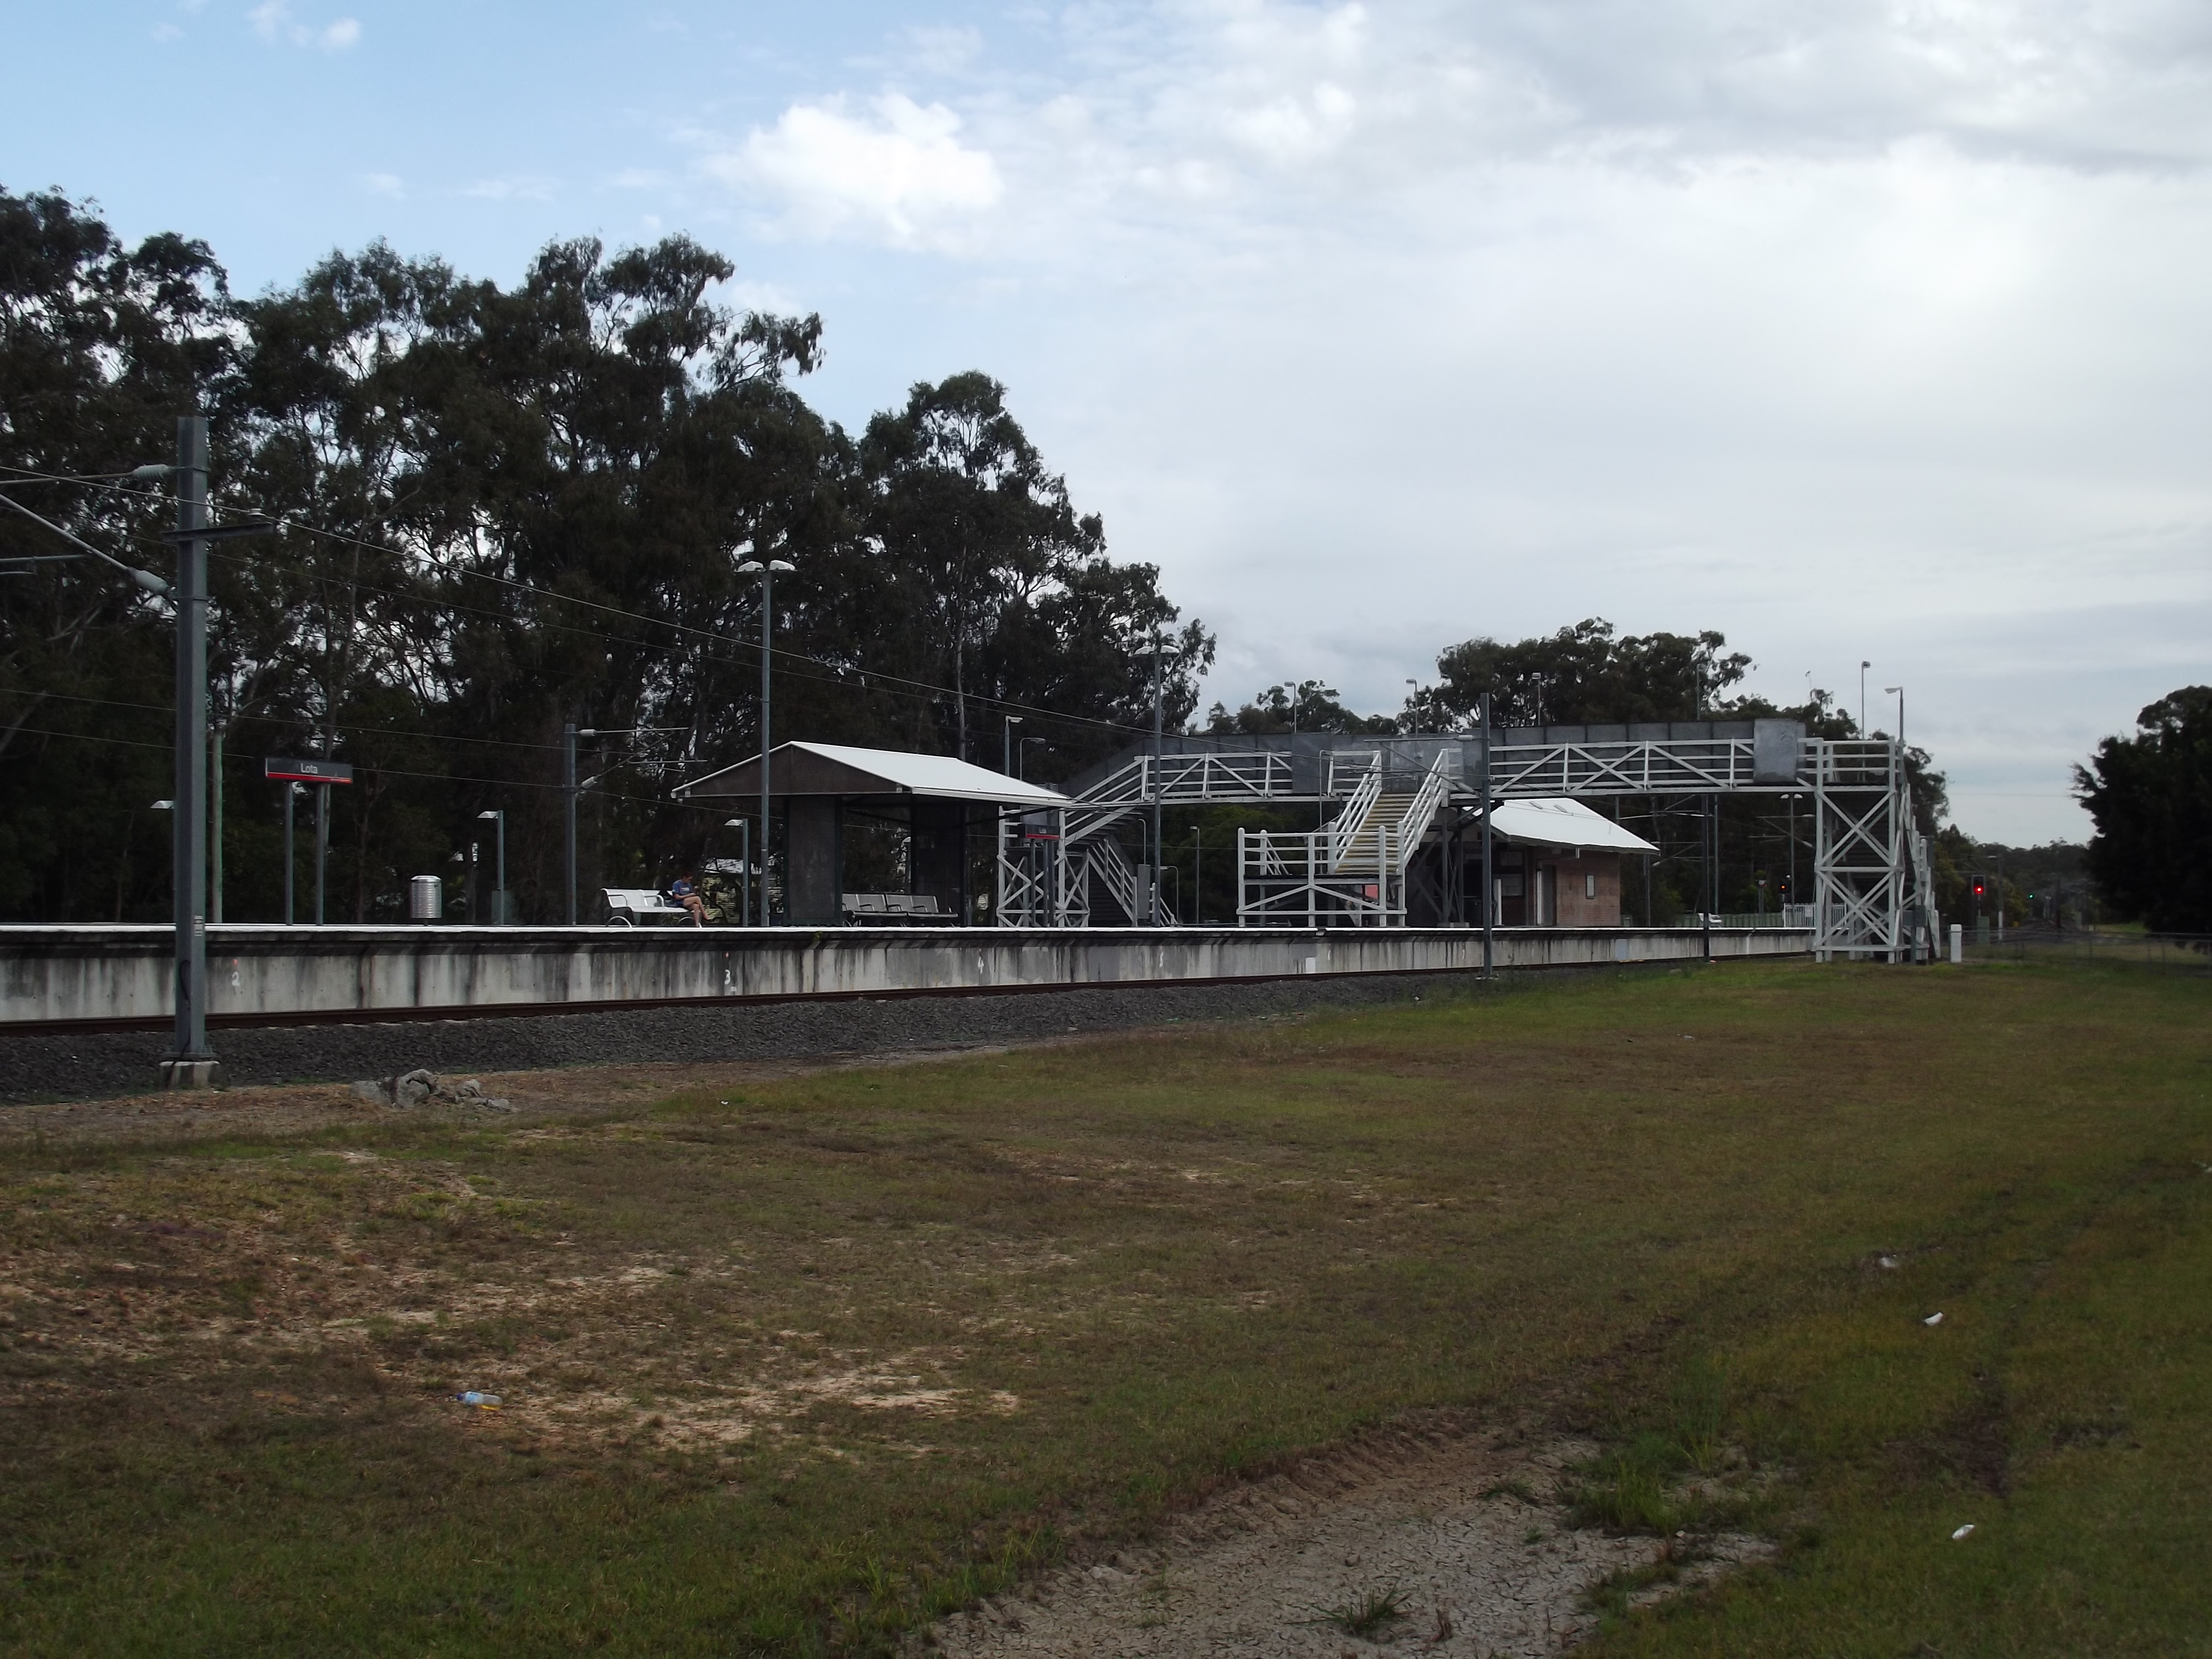 https://upload.wikimedia.org/wikipedia/commons/4/48/Lota_Railway_Station%2C_Queensland%2C_Aug_2012.JPG